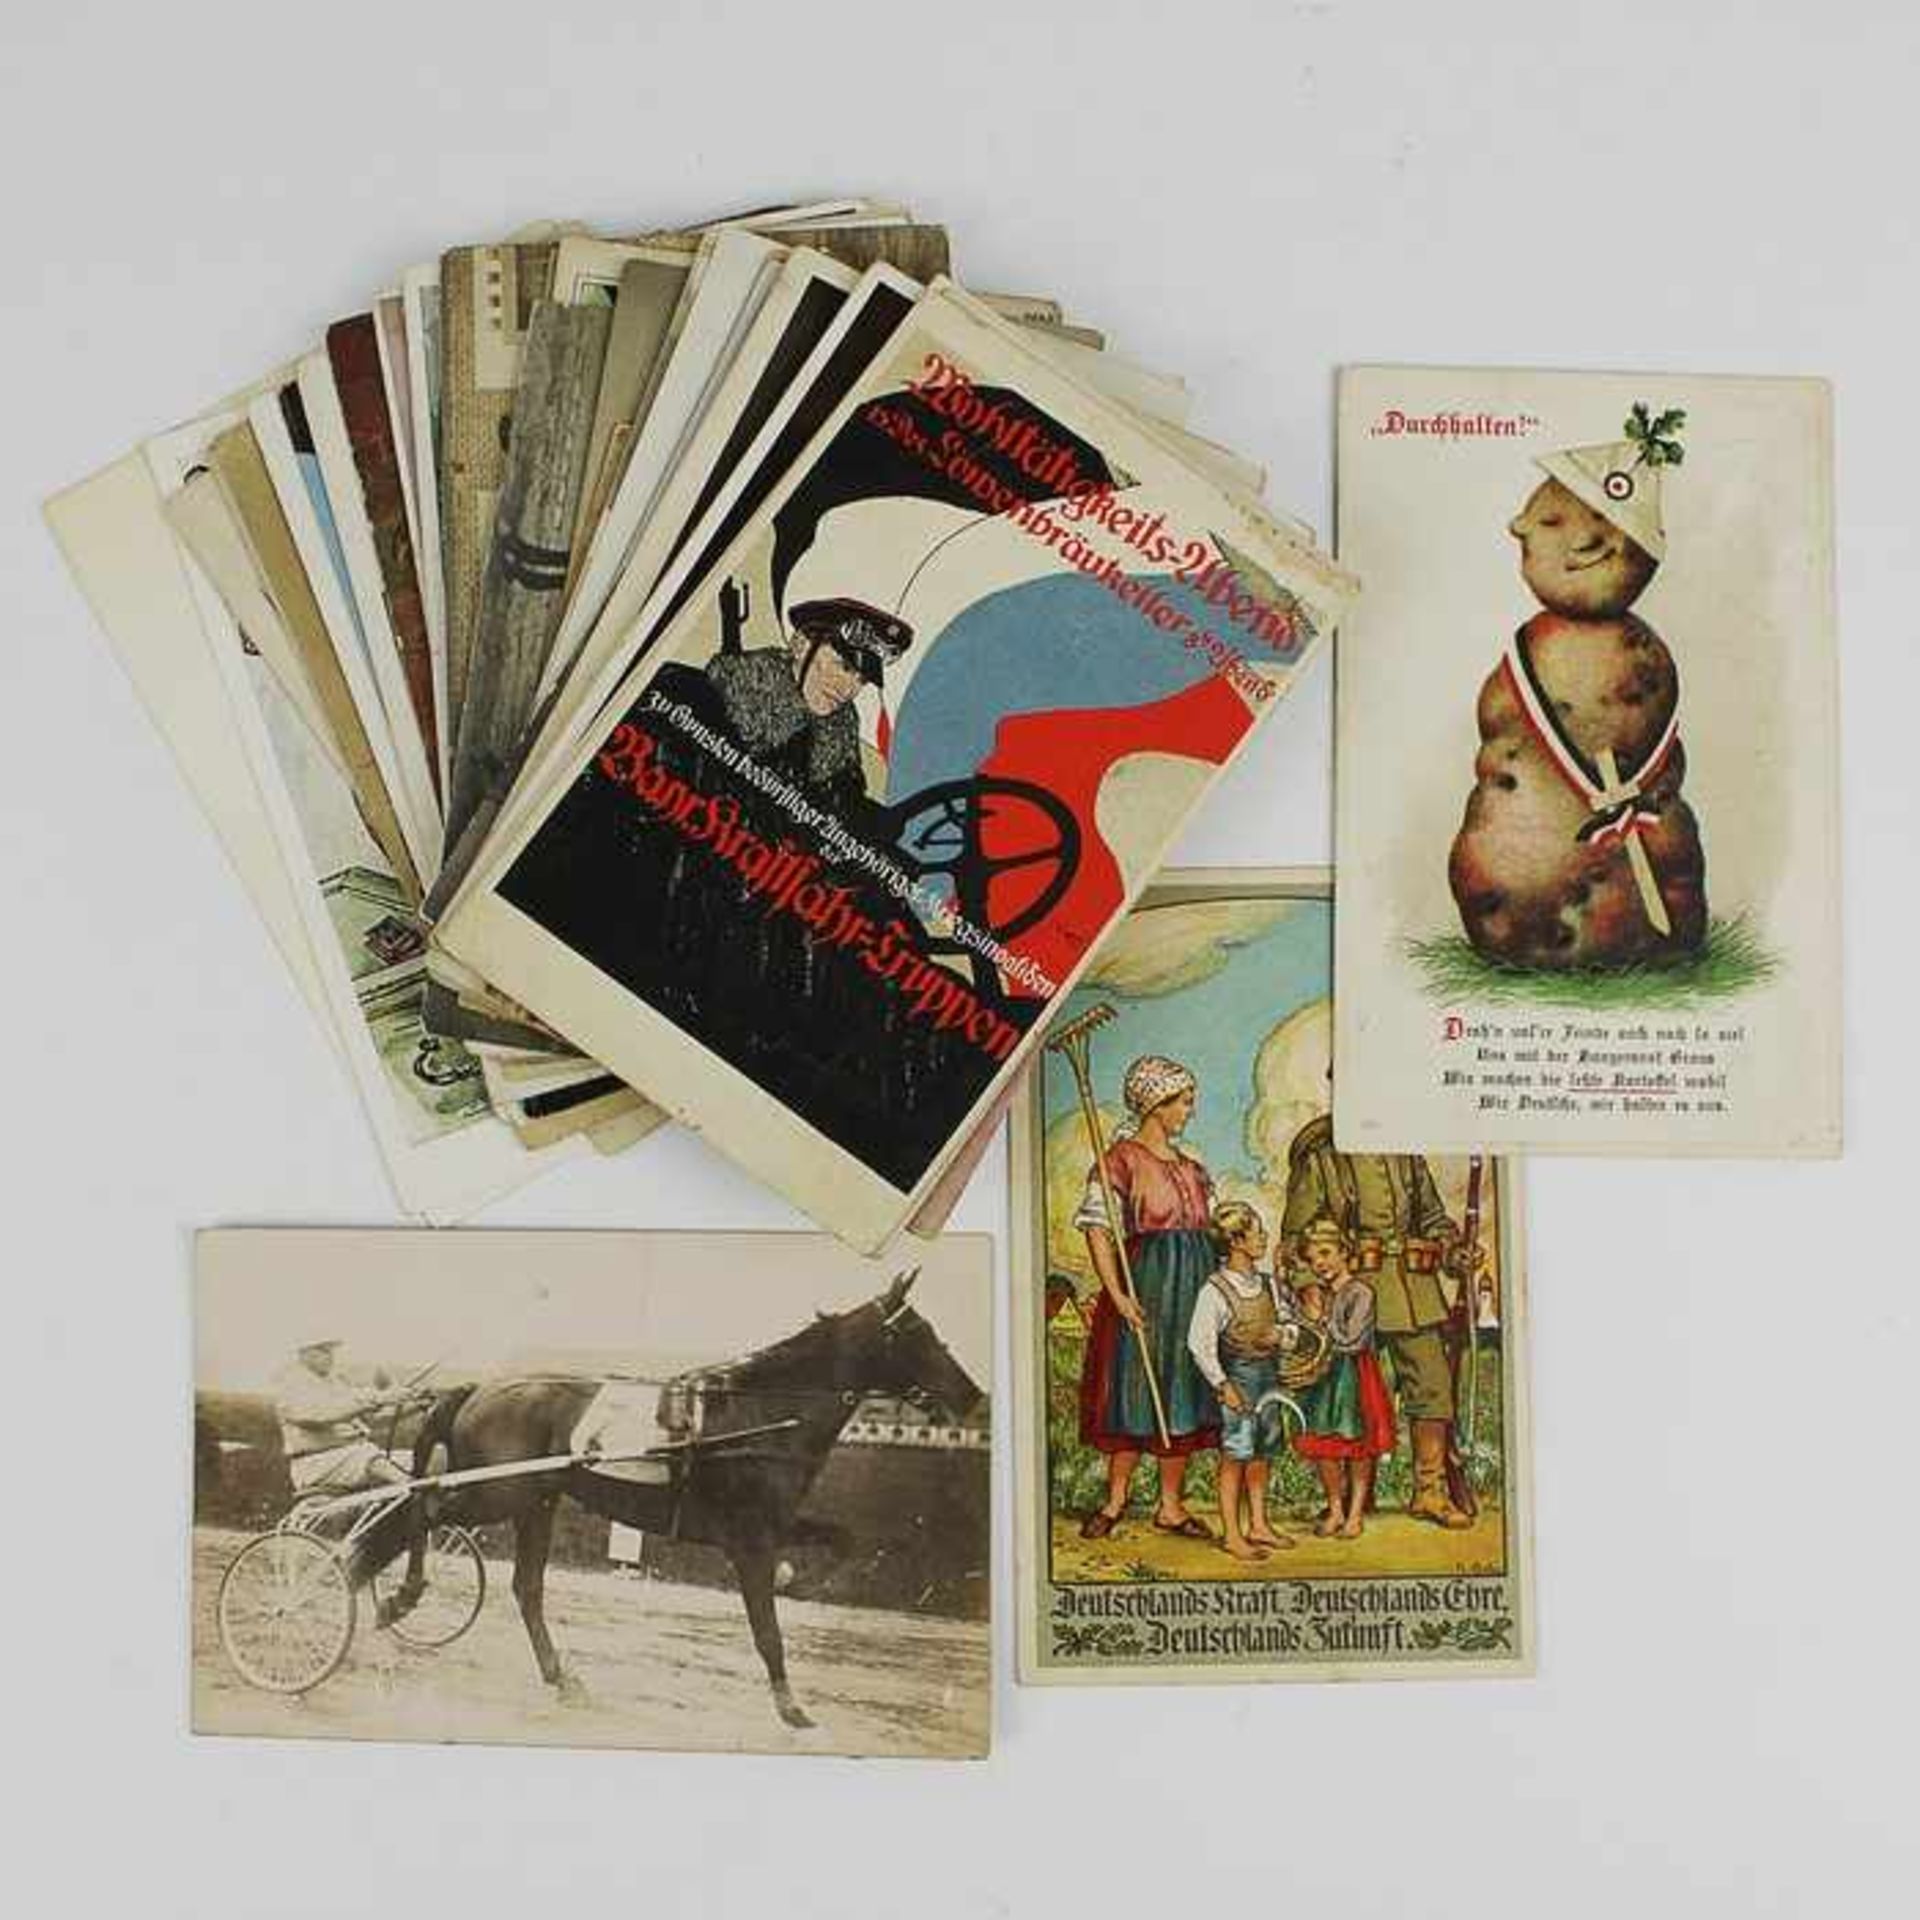 Postkartenum 1910-1950, 40 St., s/w u. farbig lithogr., Fotokarten, Militär-, Kriegs- u. Sportmotive